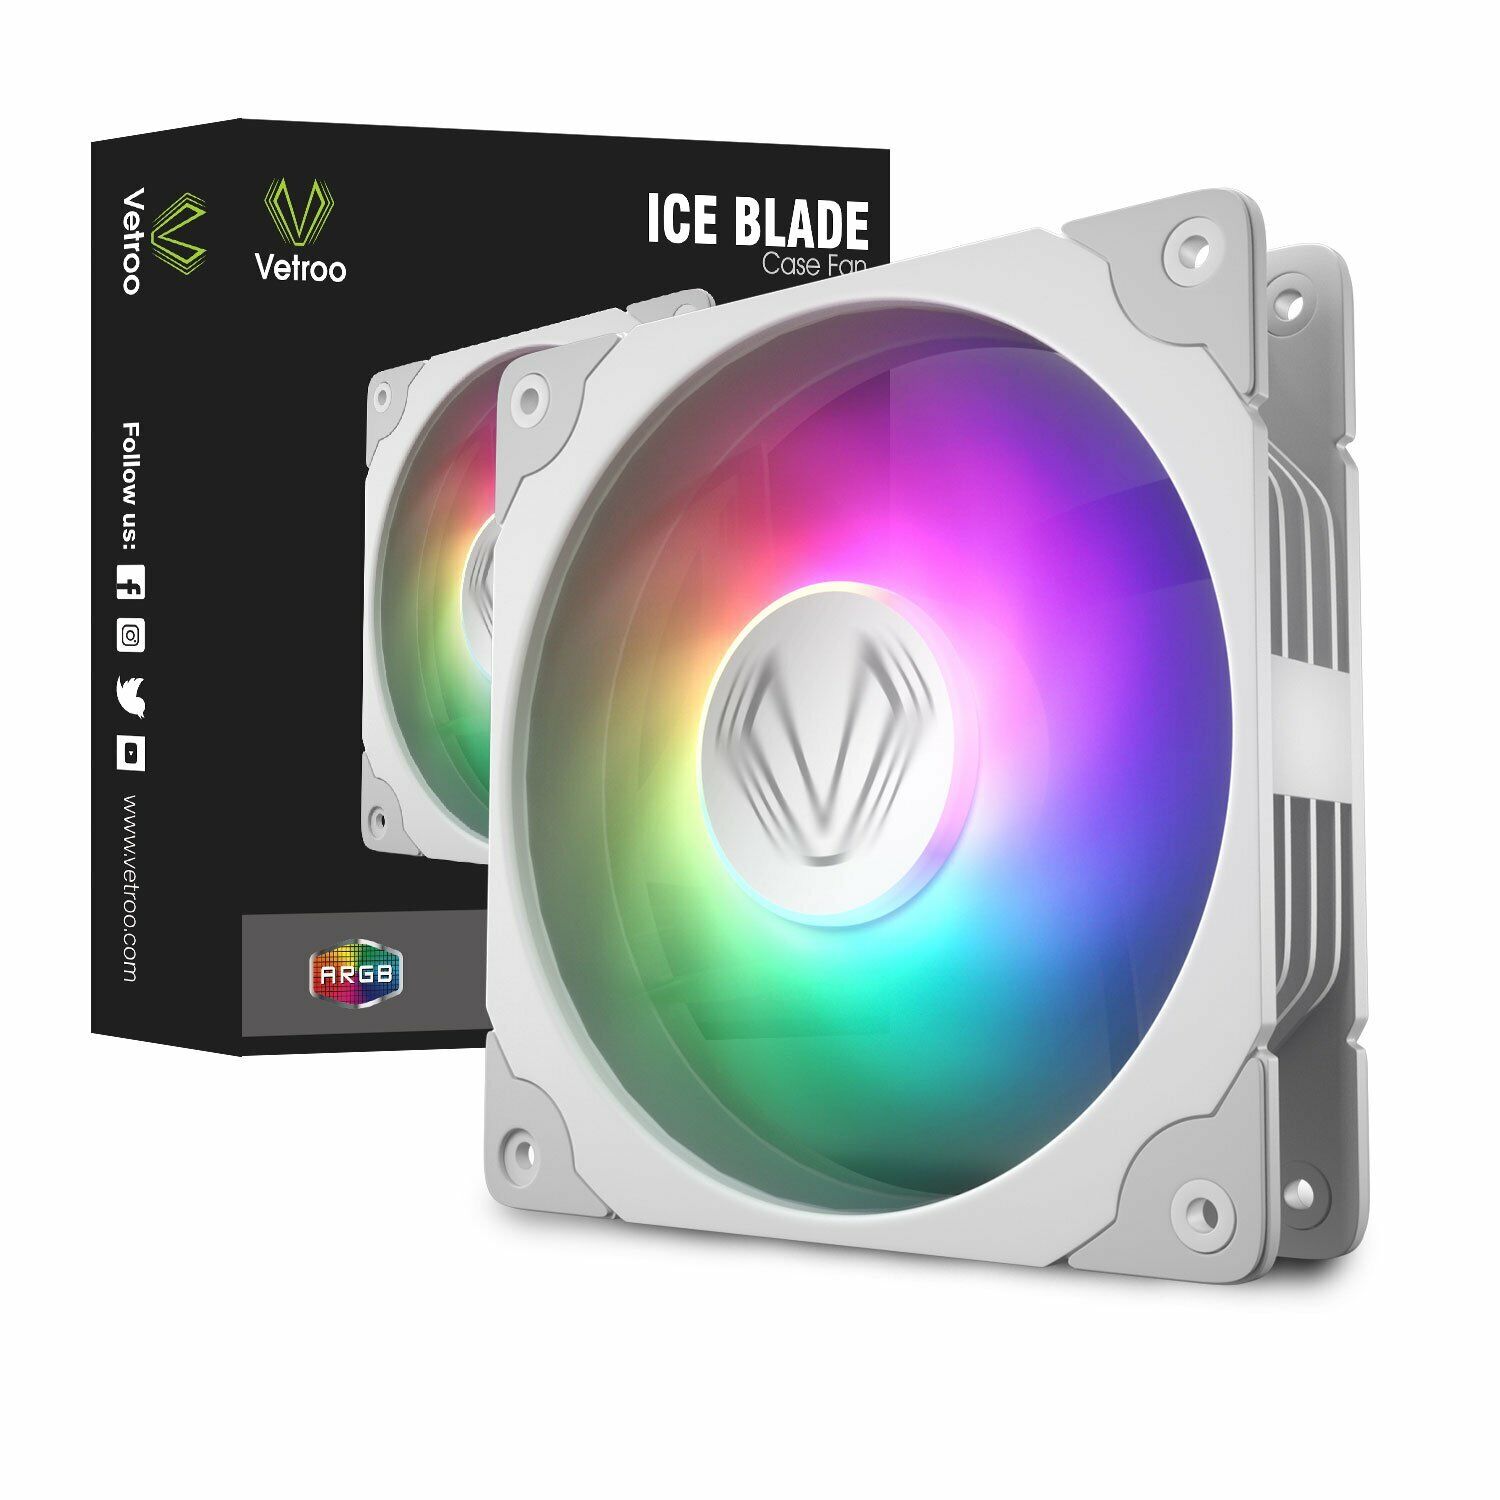 1x Vetroo White Frame ARGB 120mm LED Gaming Computer Case Cooling Fan